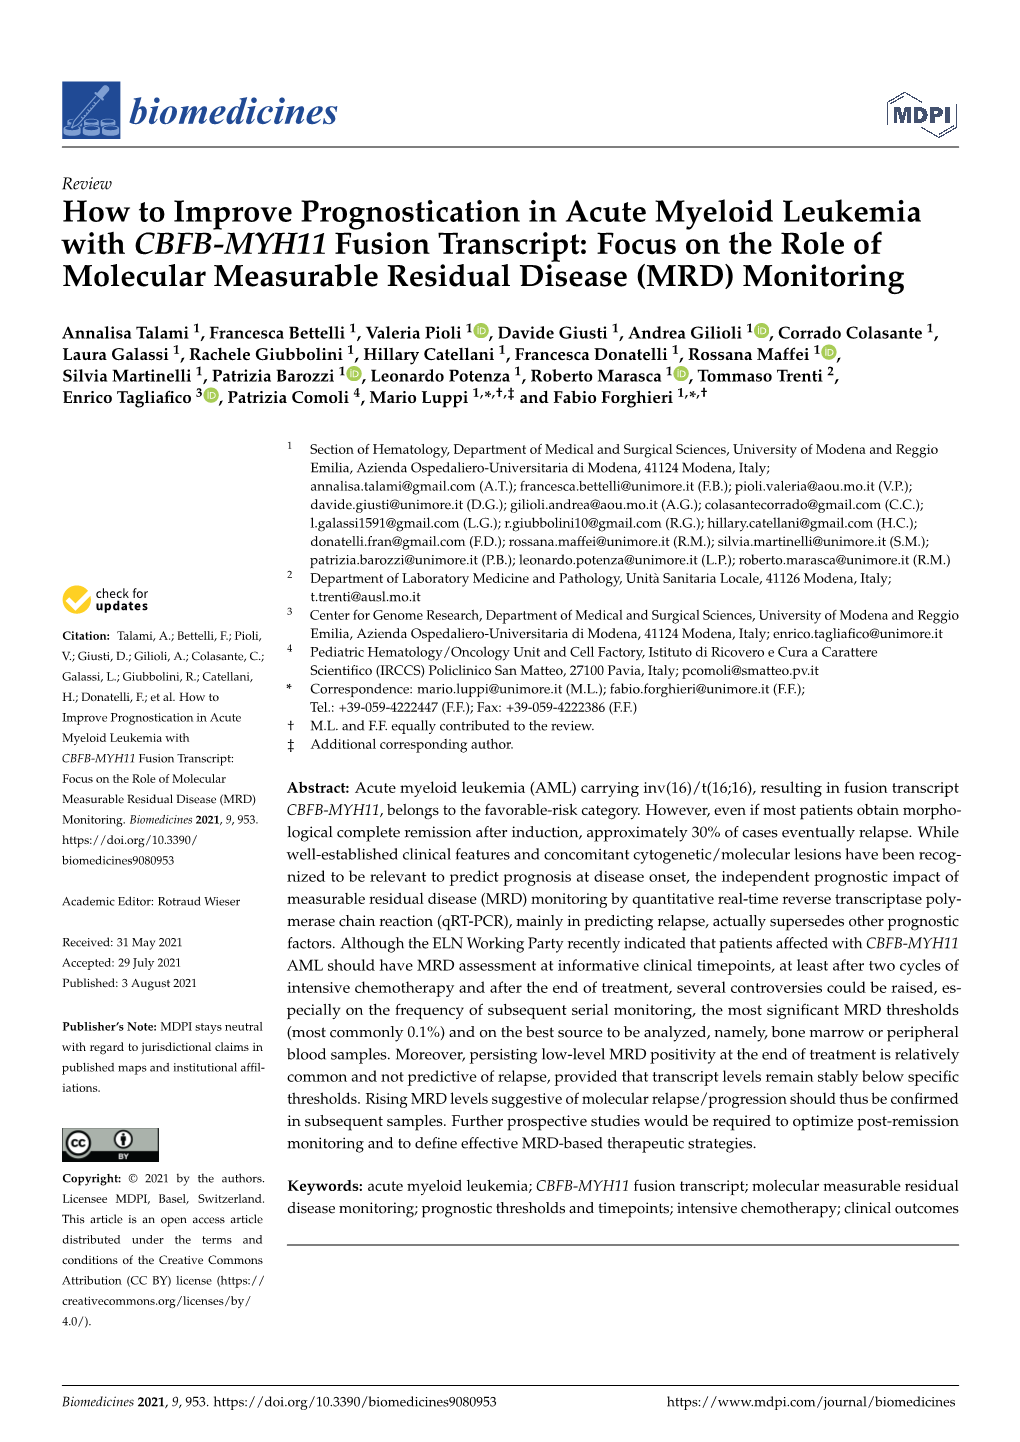 How to Improve Prognostication in Acute Myeloid Leukemia with CBFB-MYH11 Fusion Transcript